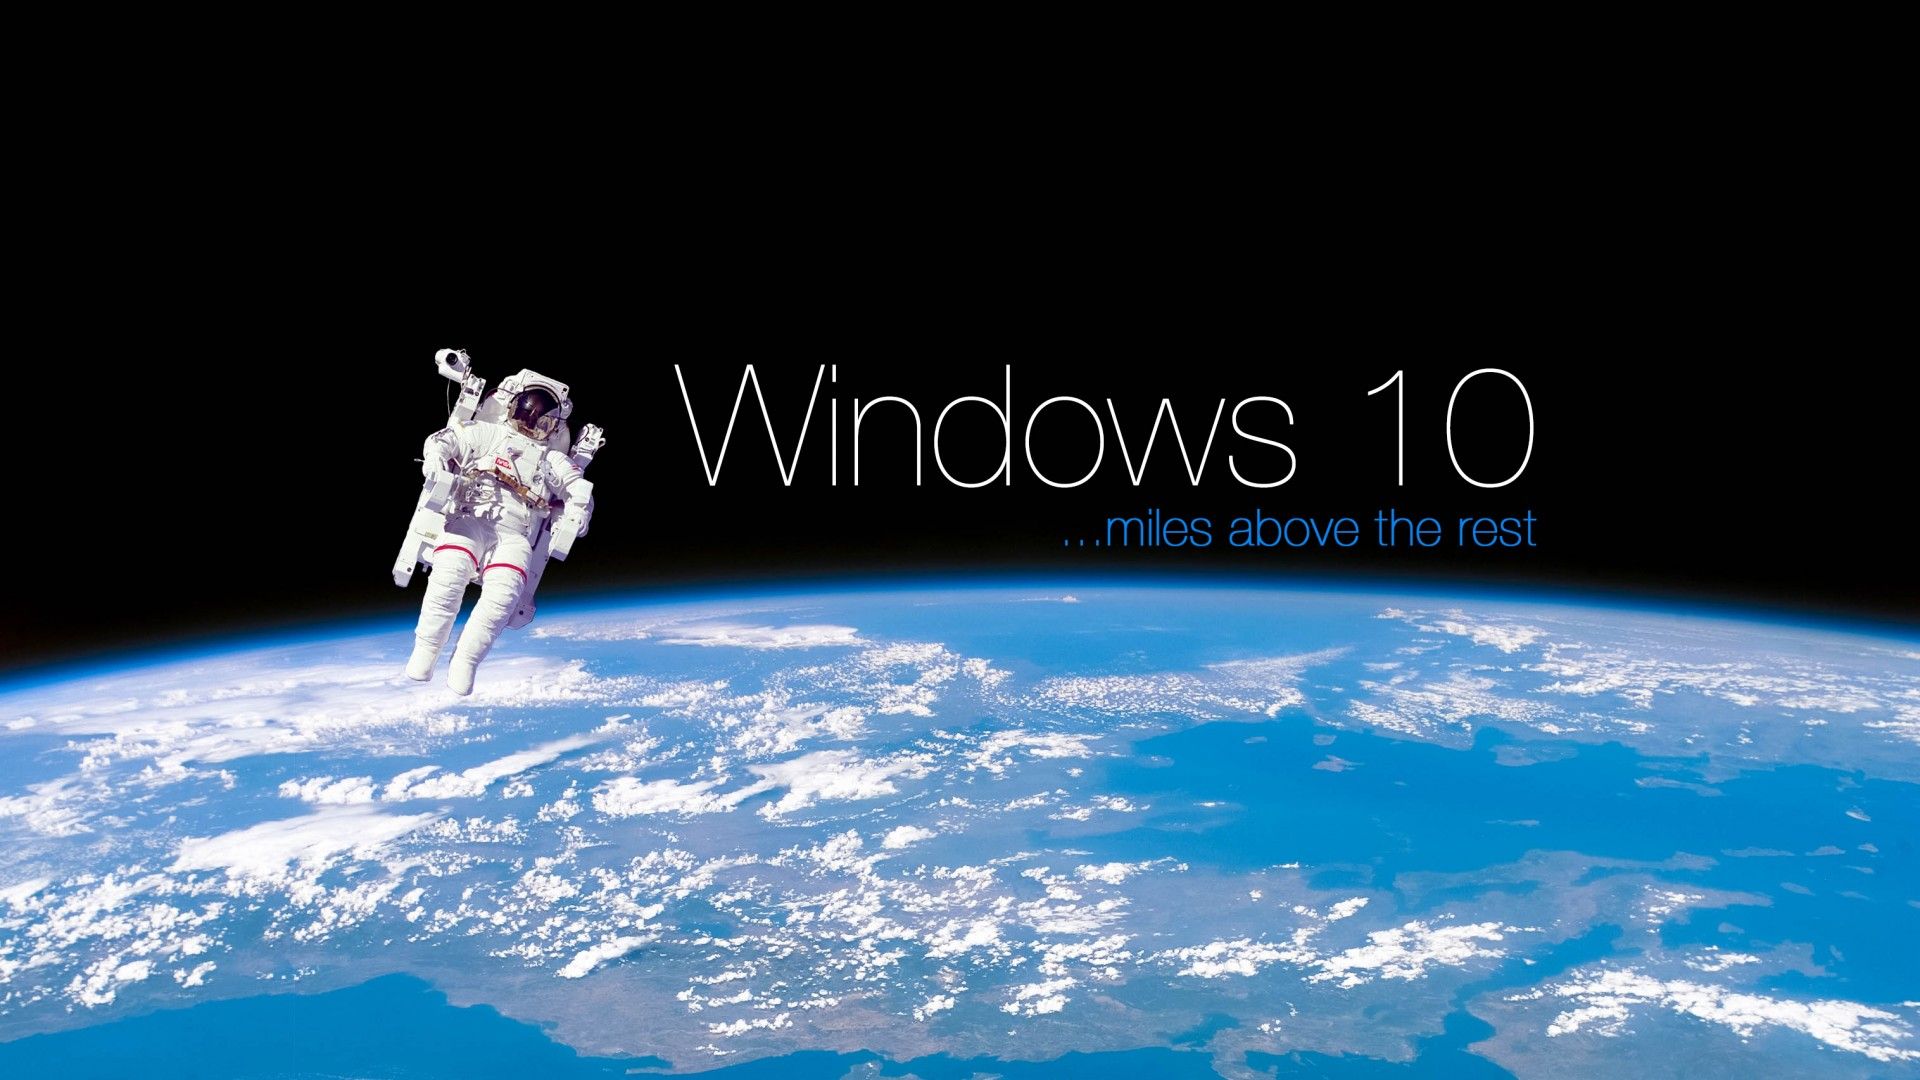 Windows 10 Space 4k Wallpaper 1920x1080 1080p Wallpaper